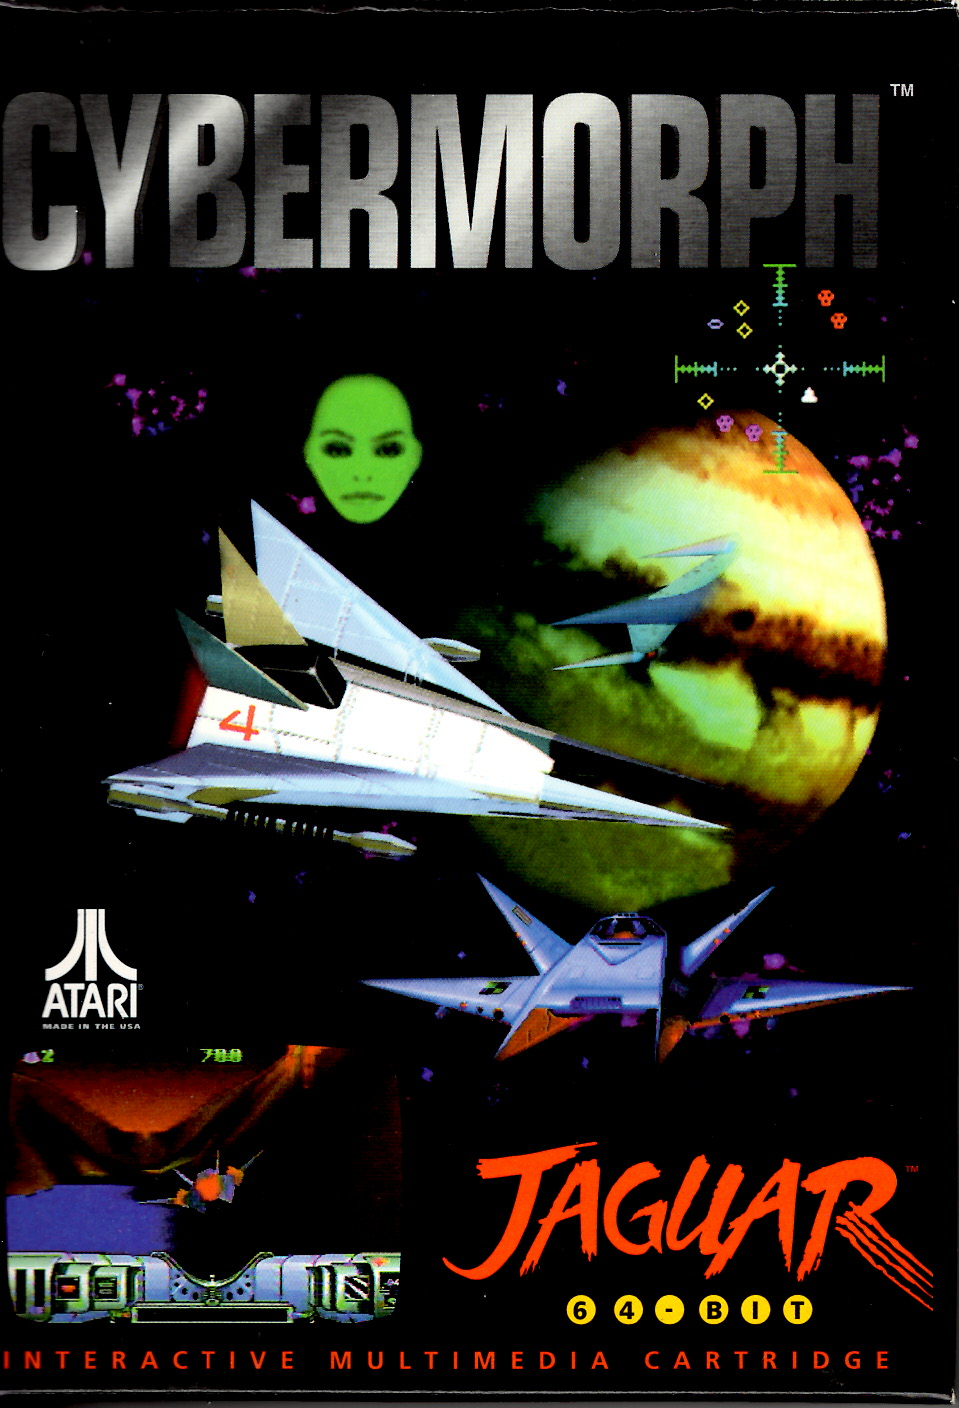 Atari Jaguar: Cybermorph